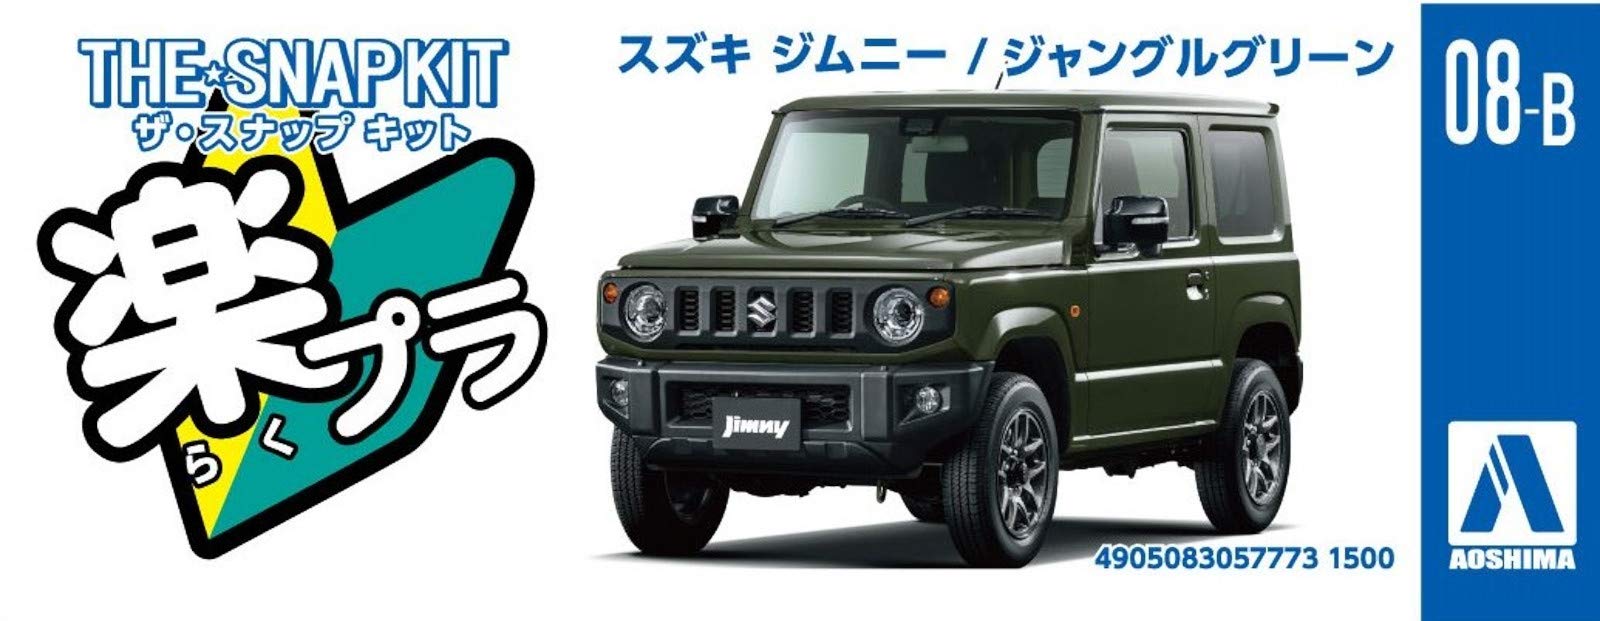 AOSHIMA 57773 08-B Suzuki Jimny Jungle Green Kit de fixation pré-peint à l'échelle 1/32